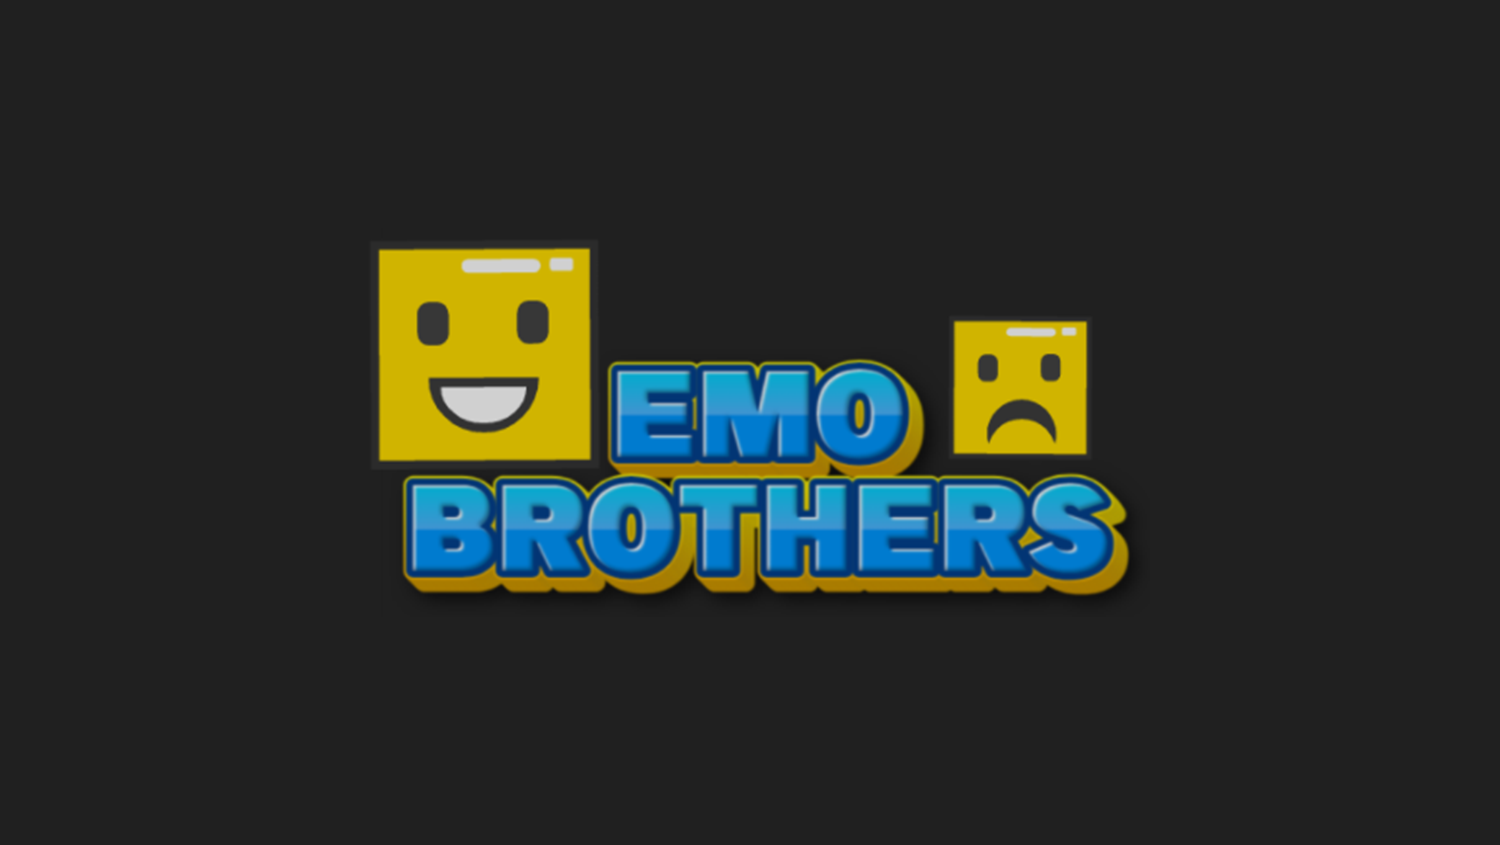 Emo Brothers Game Welcome Screen Screenshot.